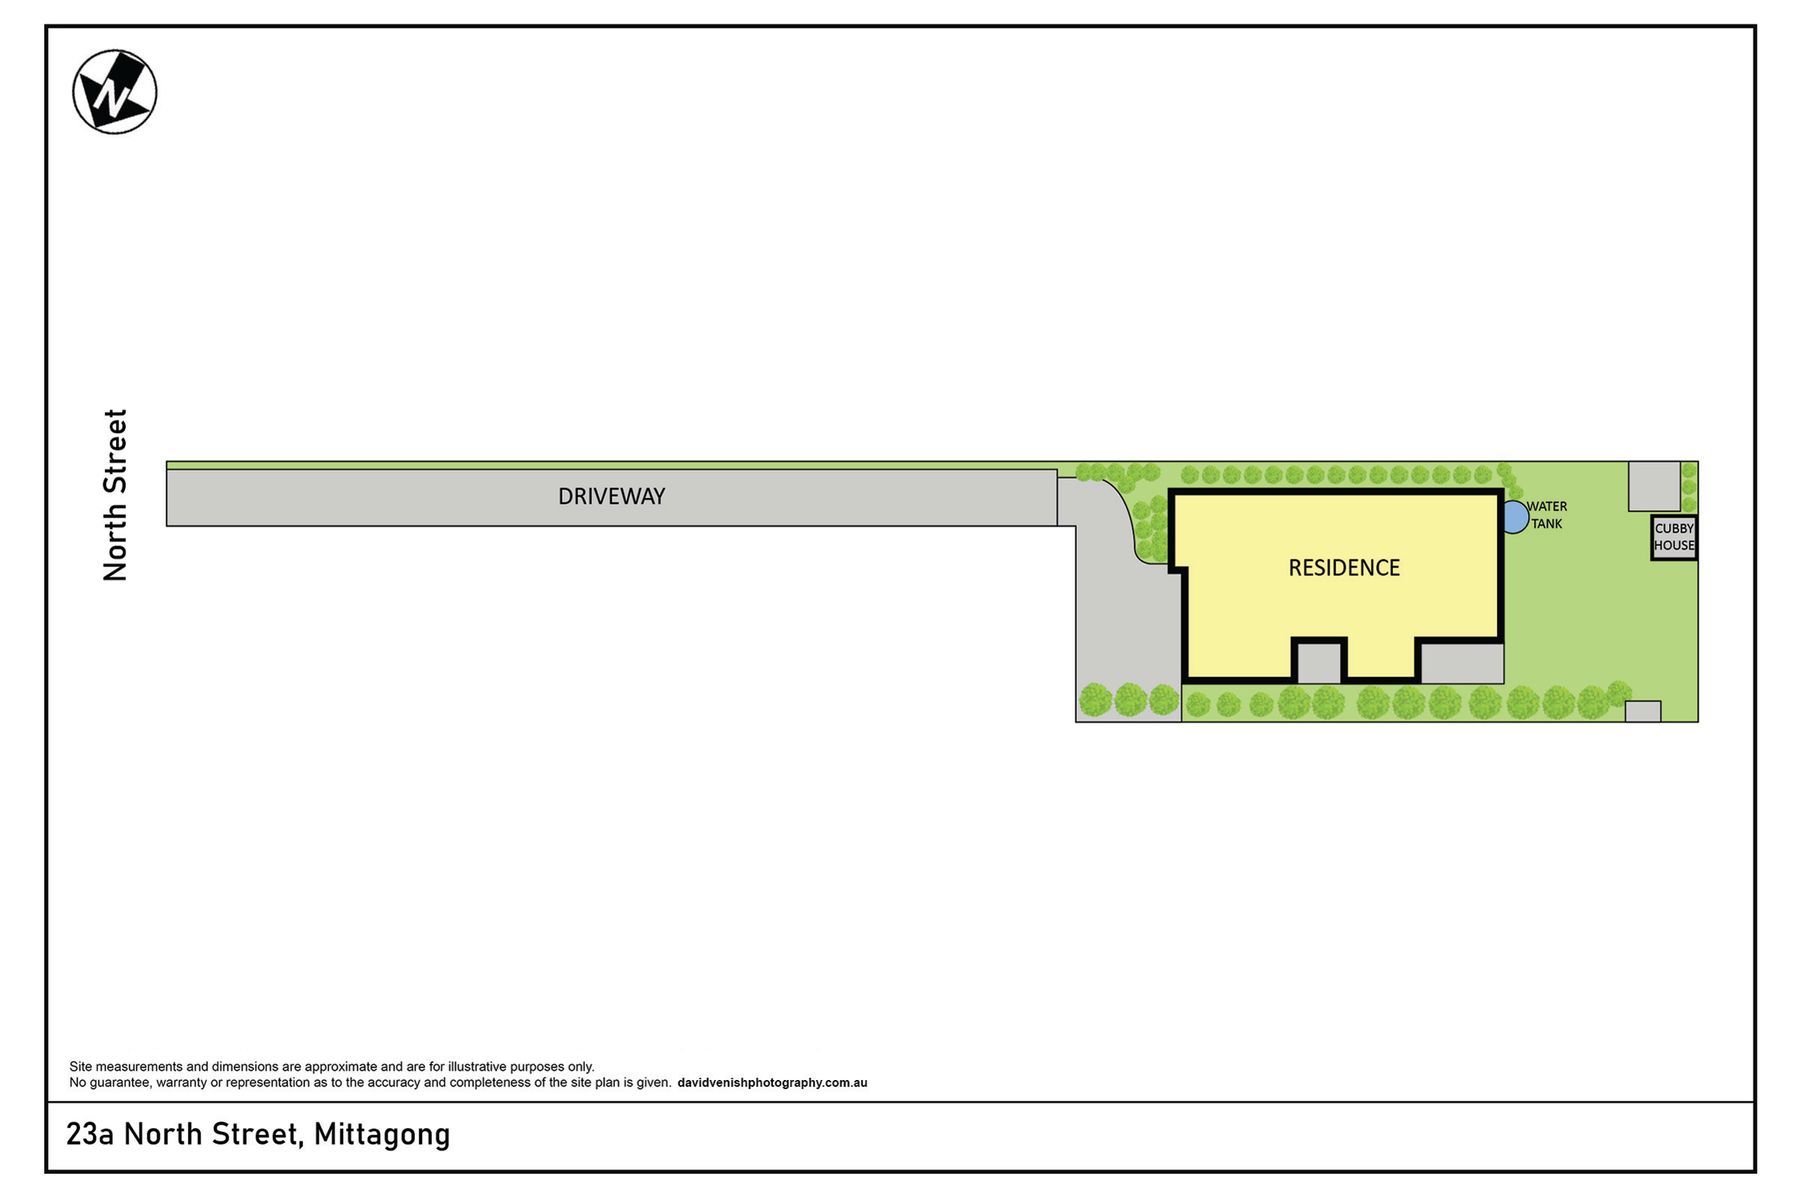 23a North Street, Mittagong   Site Plan